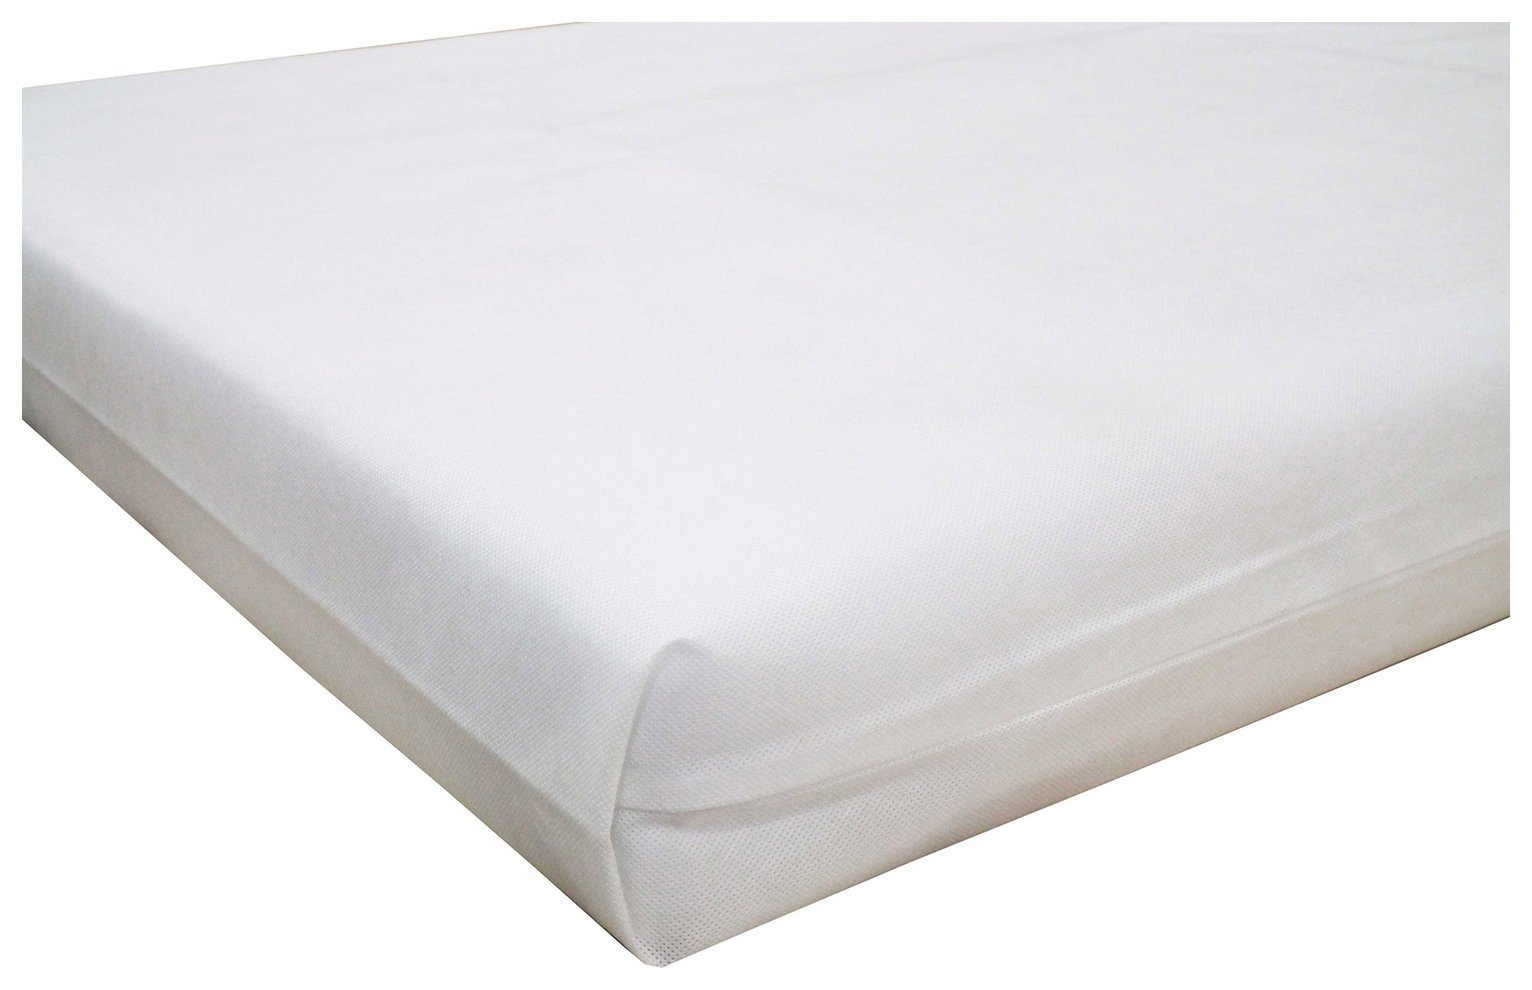 travel cot mattress size guide